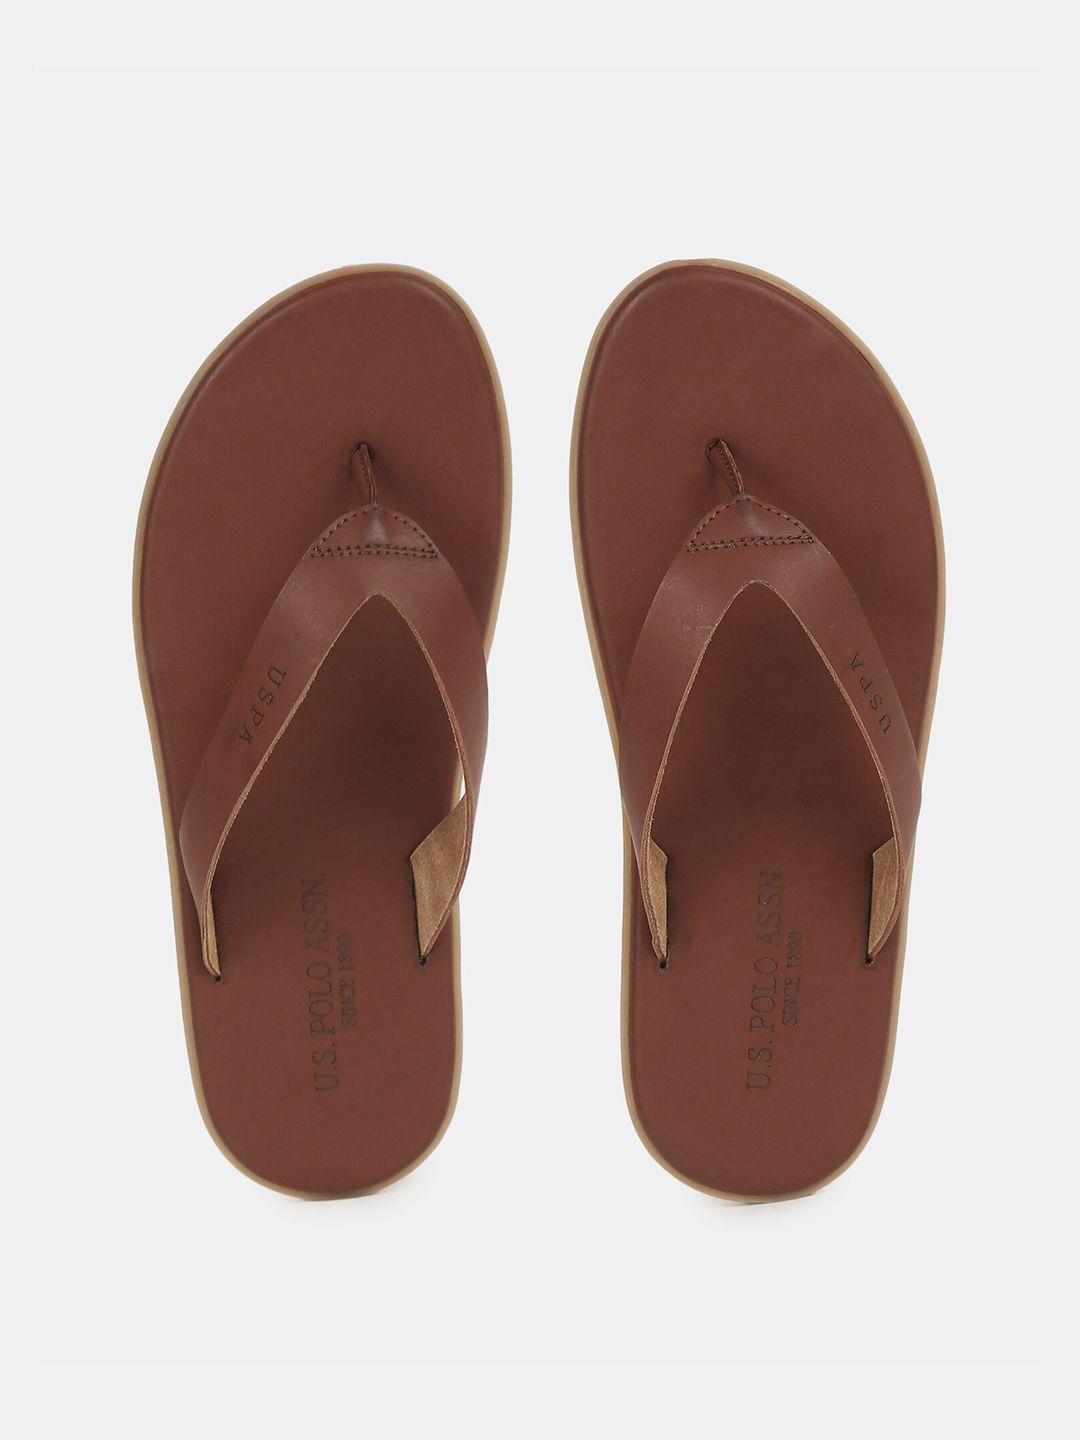 u-s-polo-assn-men-tan-leather-comfort-sandals